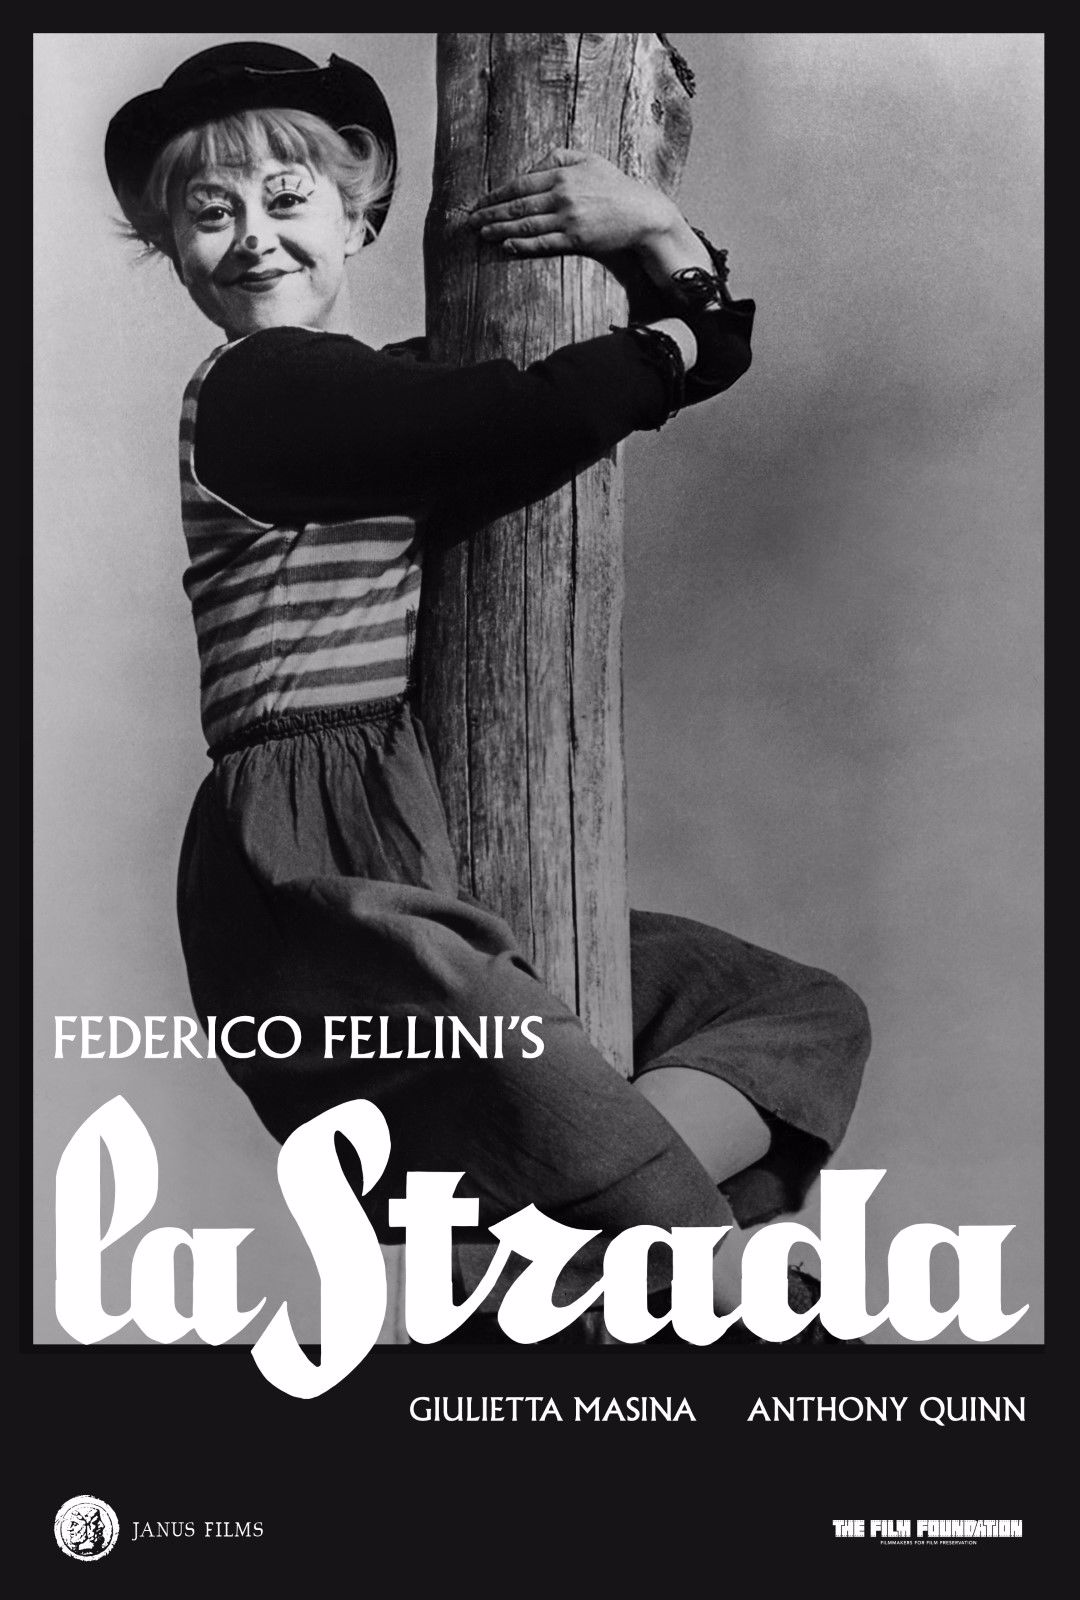 Virtual Cinema, Saluting Federico Fellini and His Masterpiece: “La Strada”, Inside the MFAH